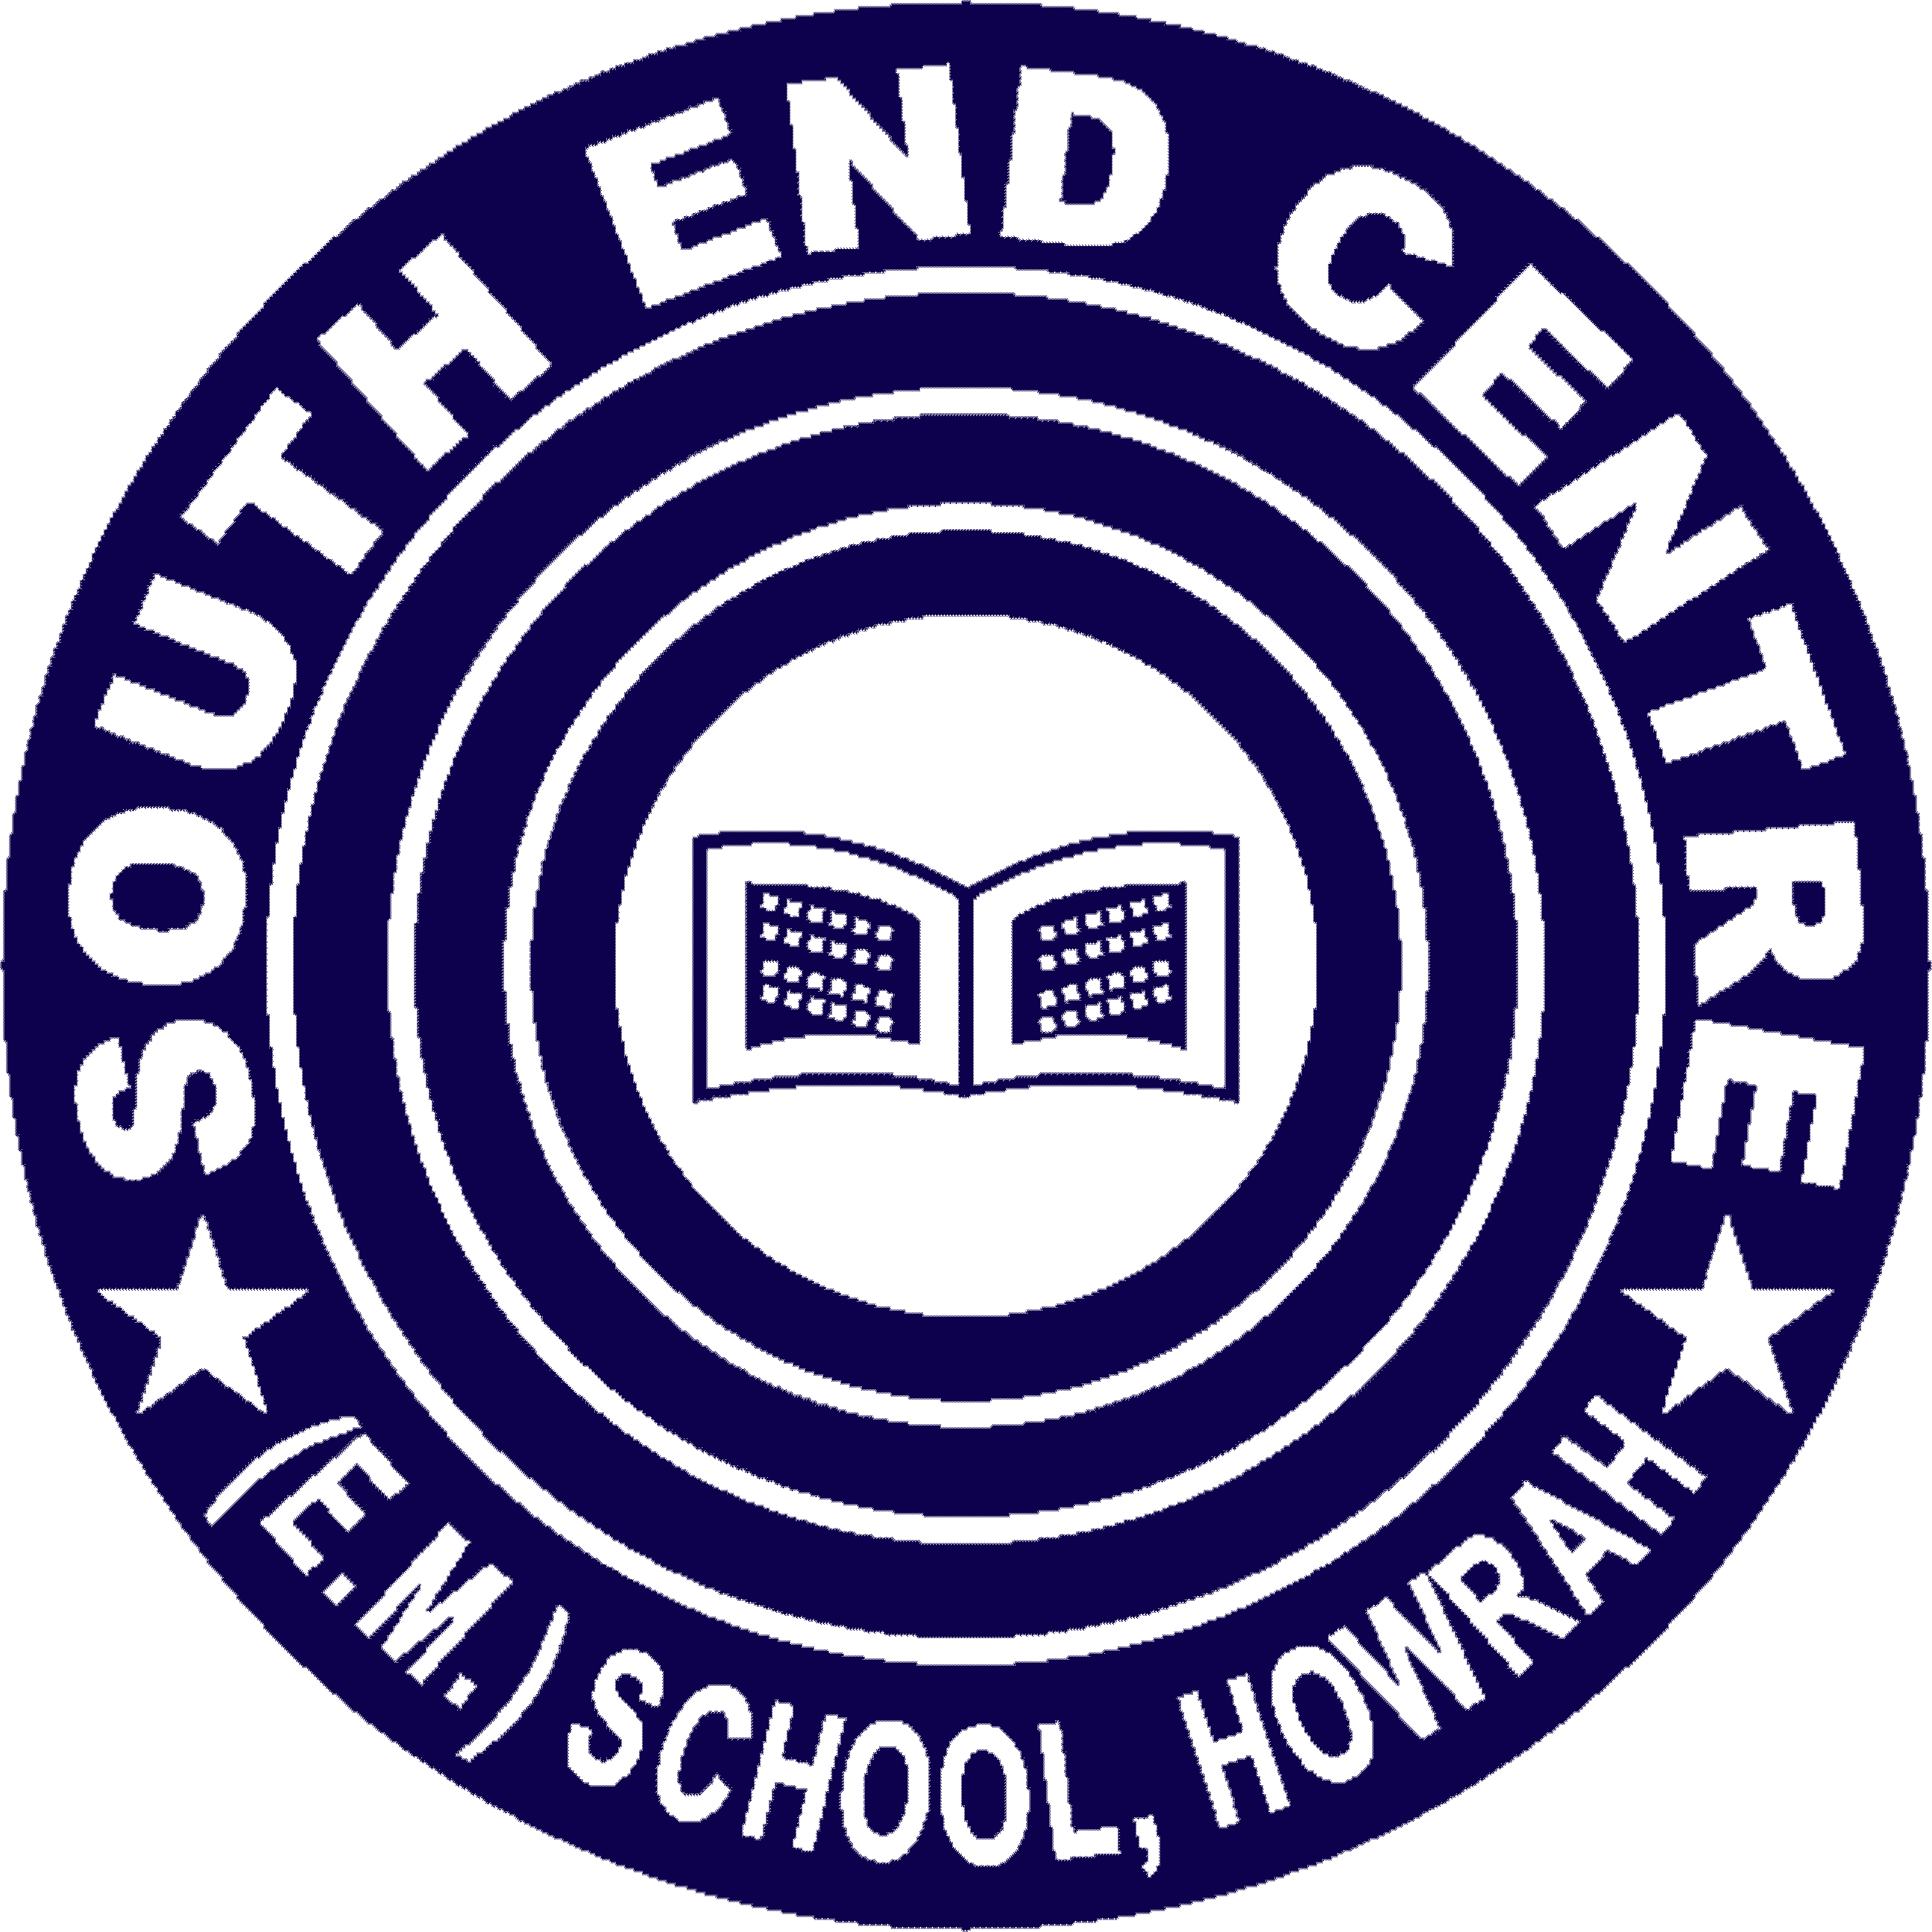 South End Centre (EM) High School|Schools|Education